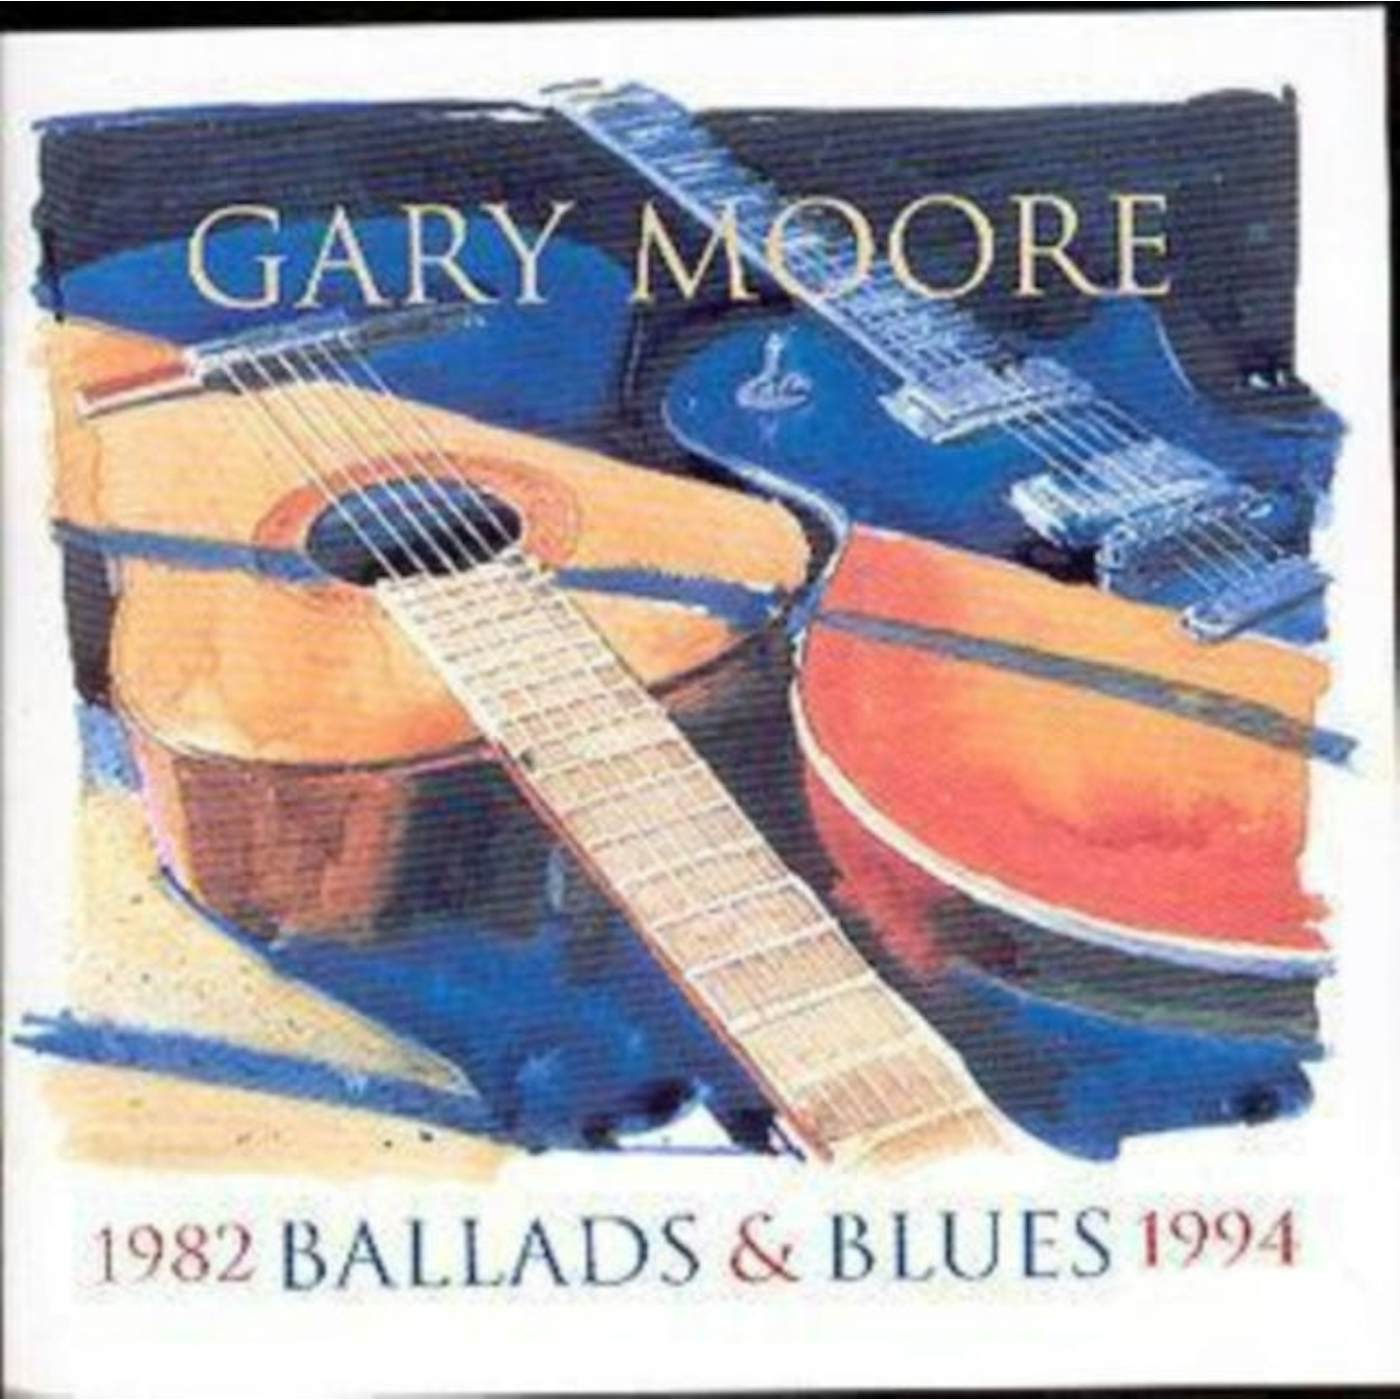 Gary Moore CD - Ballads & Blues 19 82-19 94